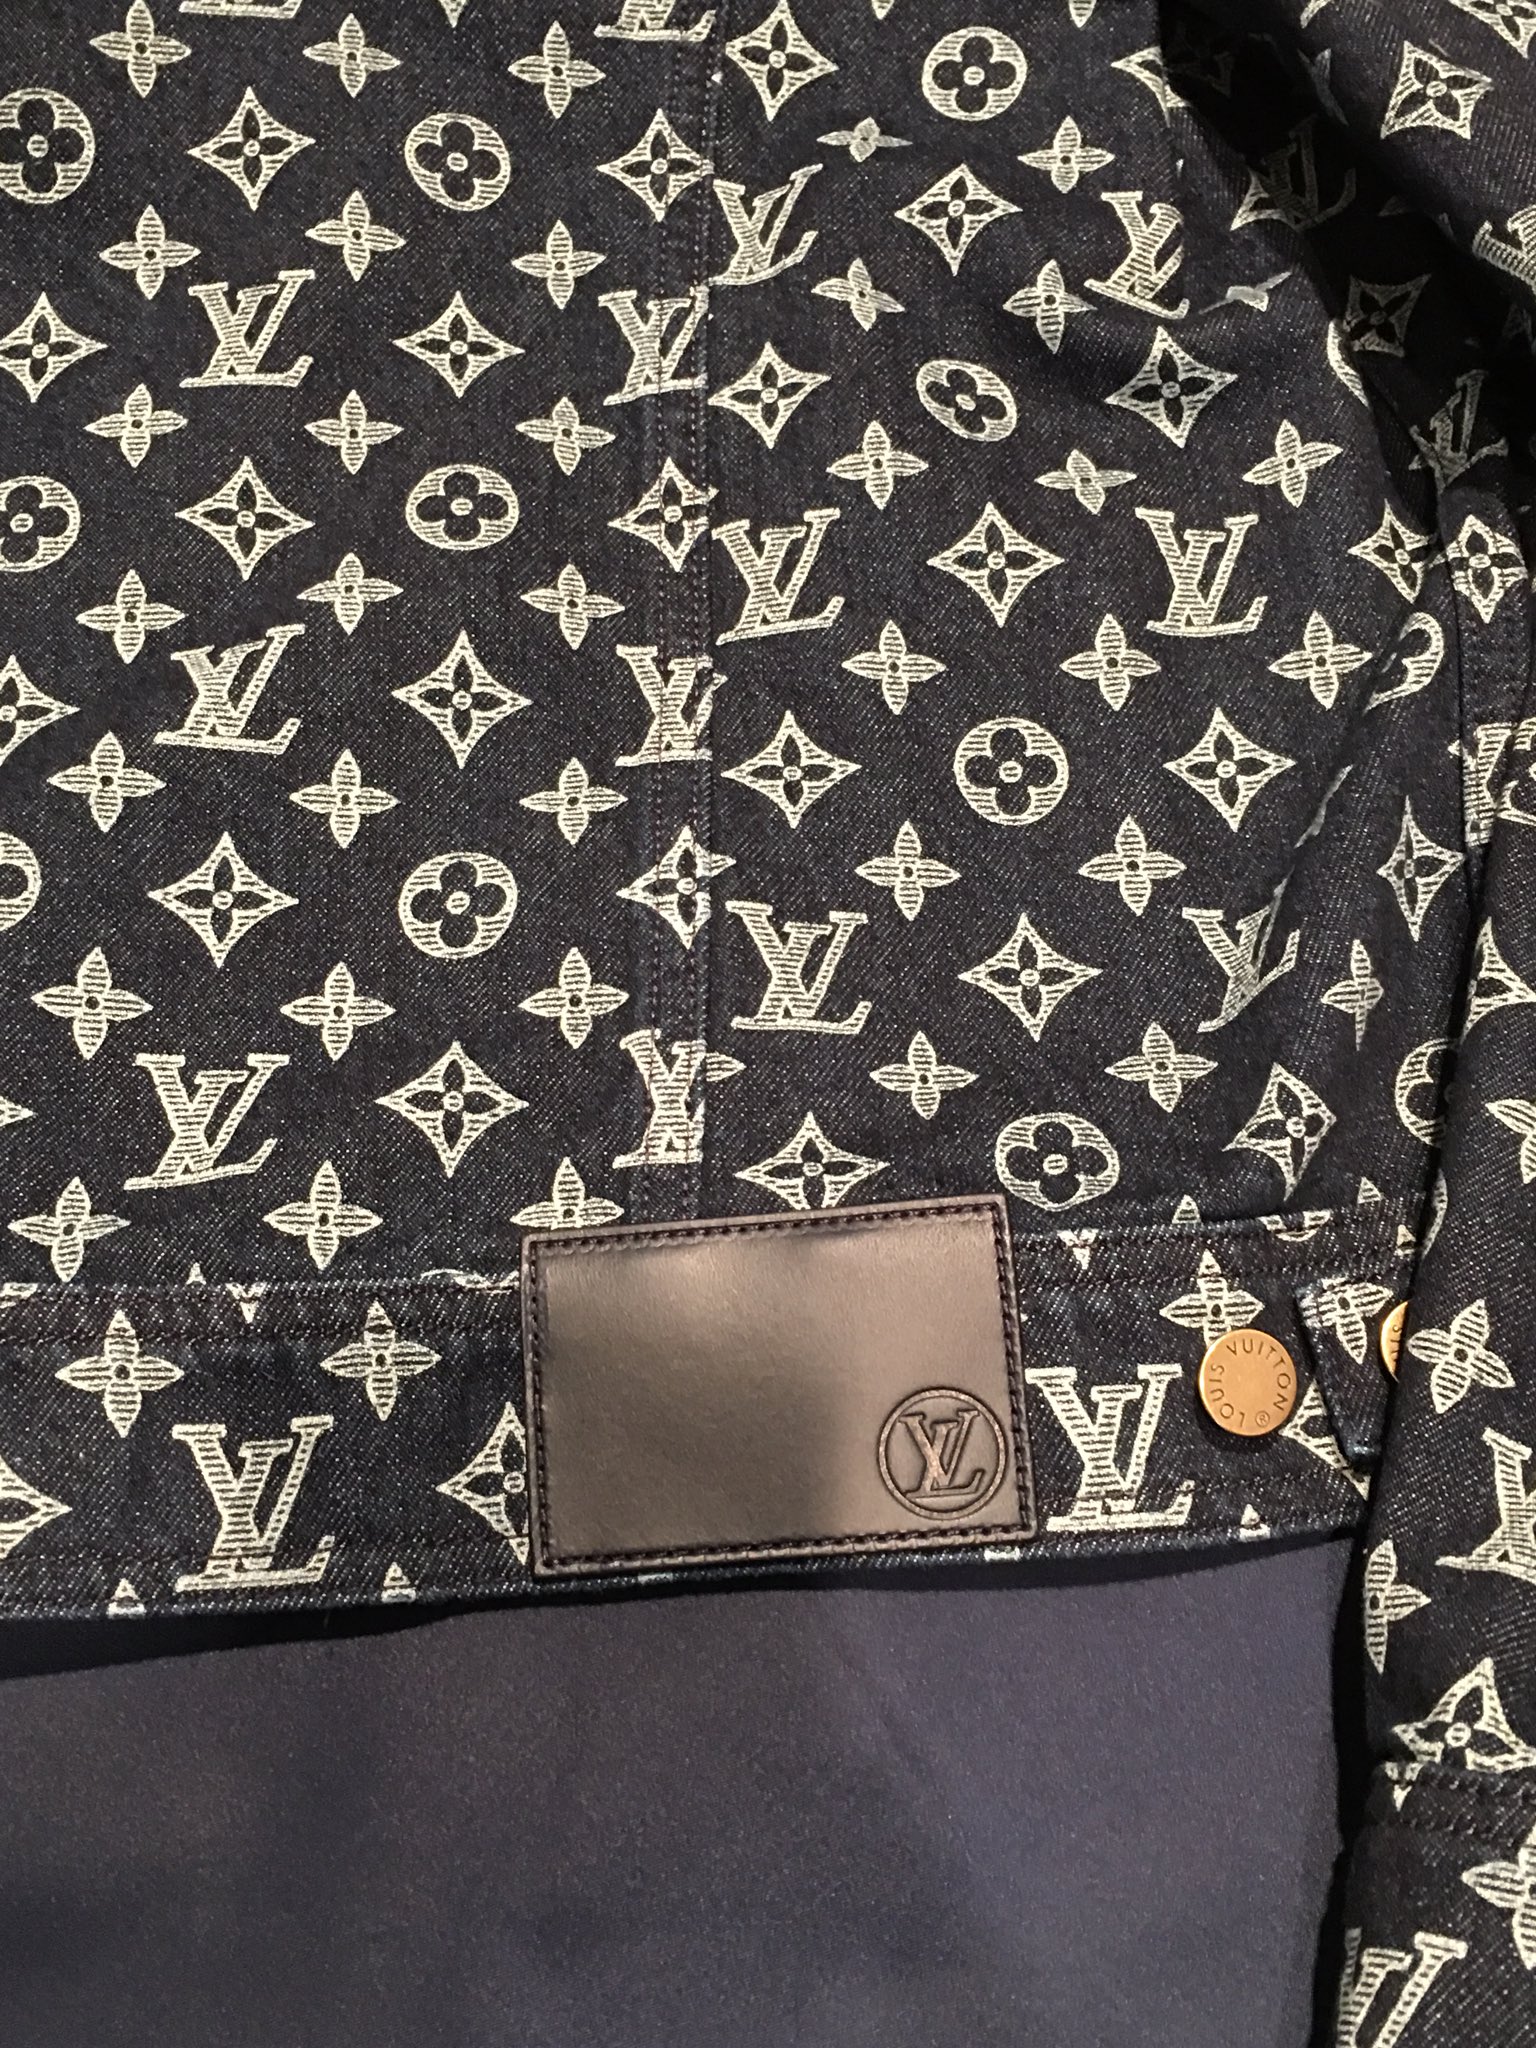 Louis Vuitton Kim Jones Monogram Denim Jacket (Large)